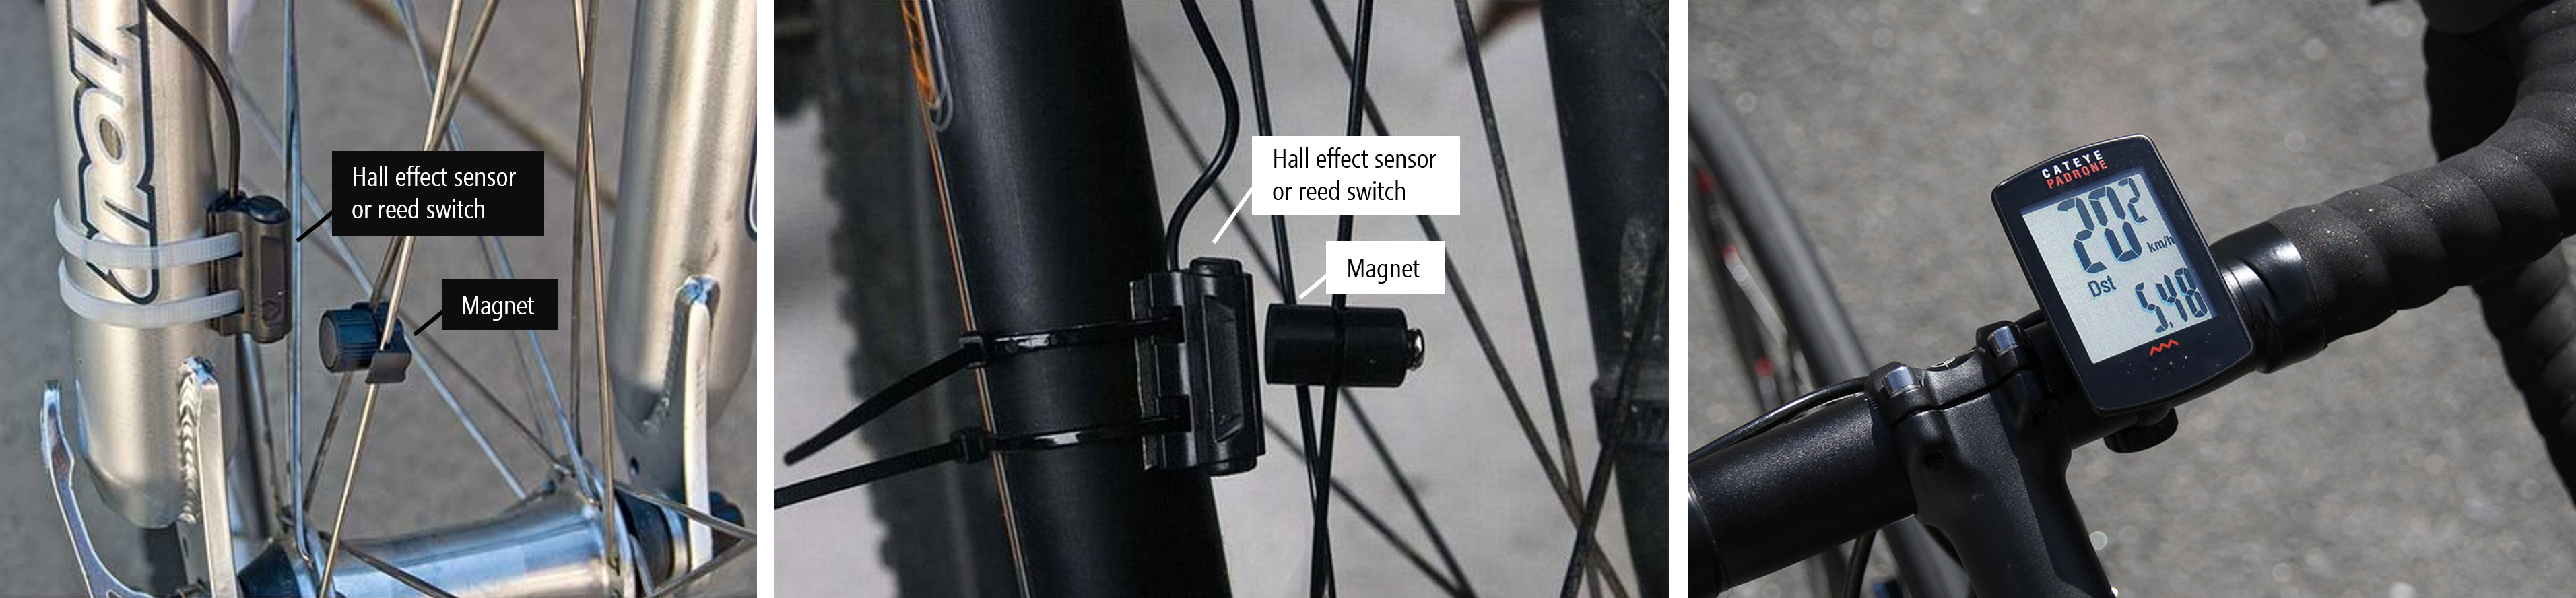 Magnet-based sensors used in bike tachometers